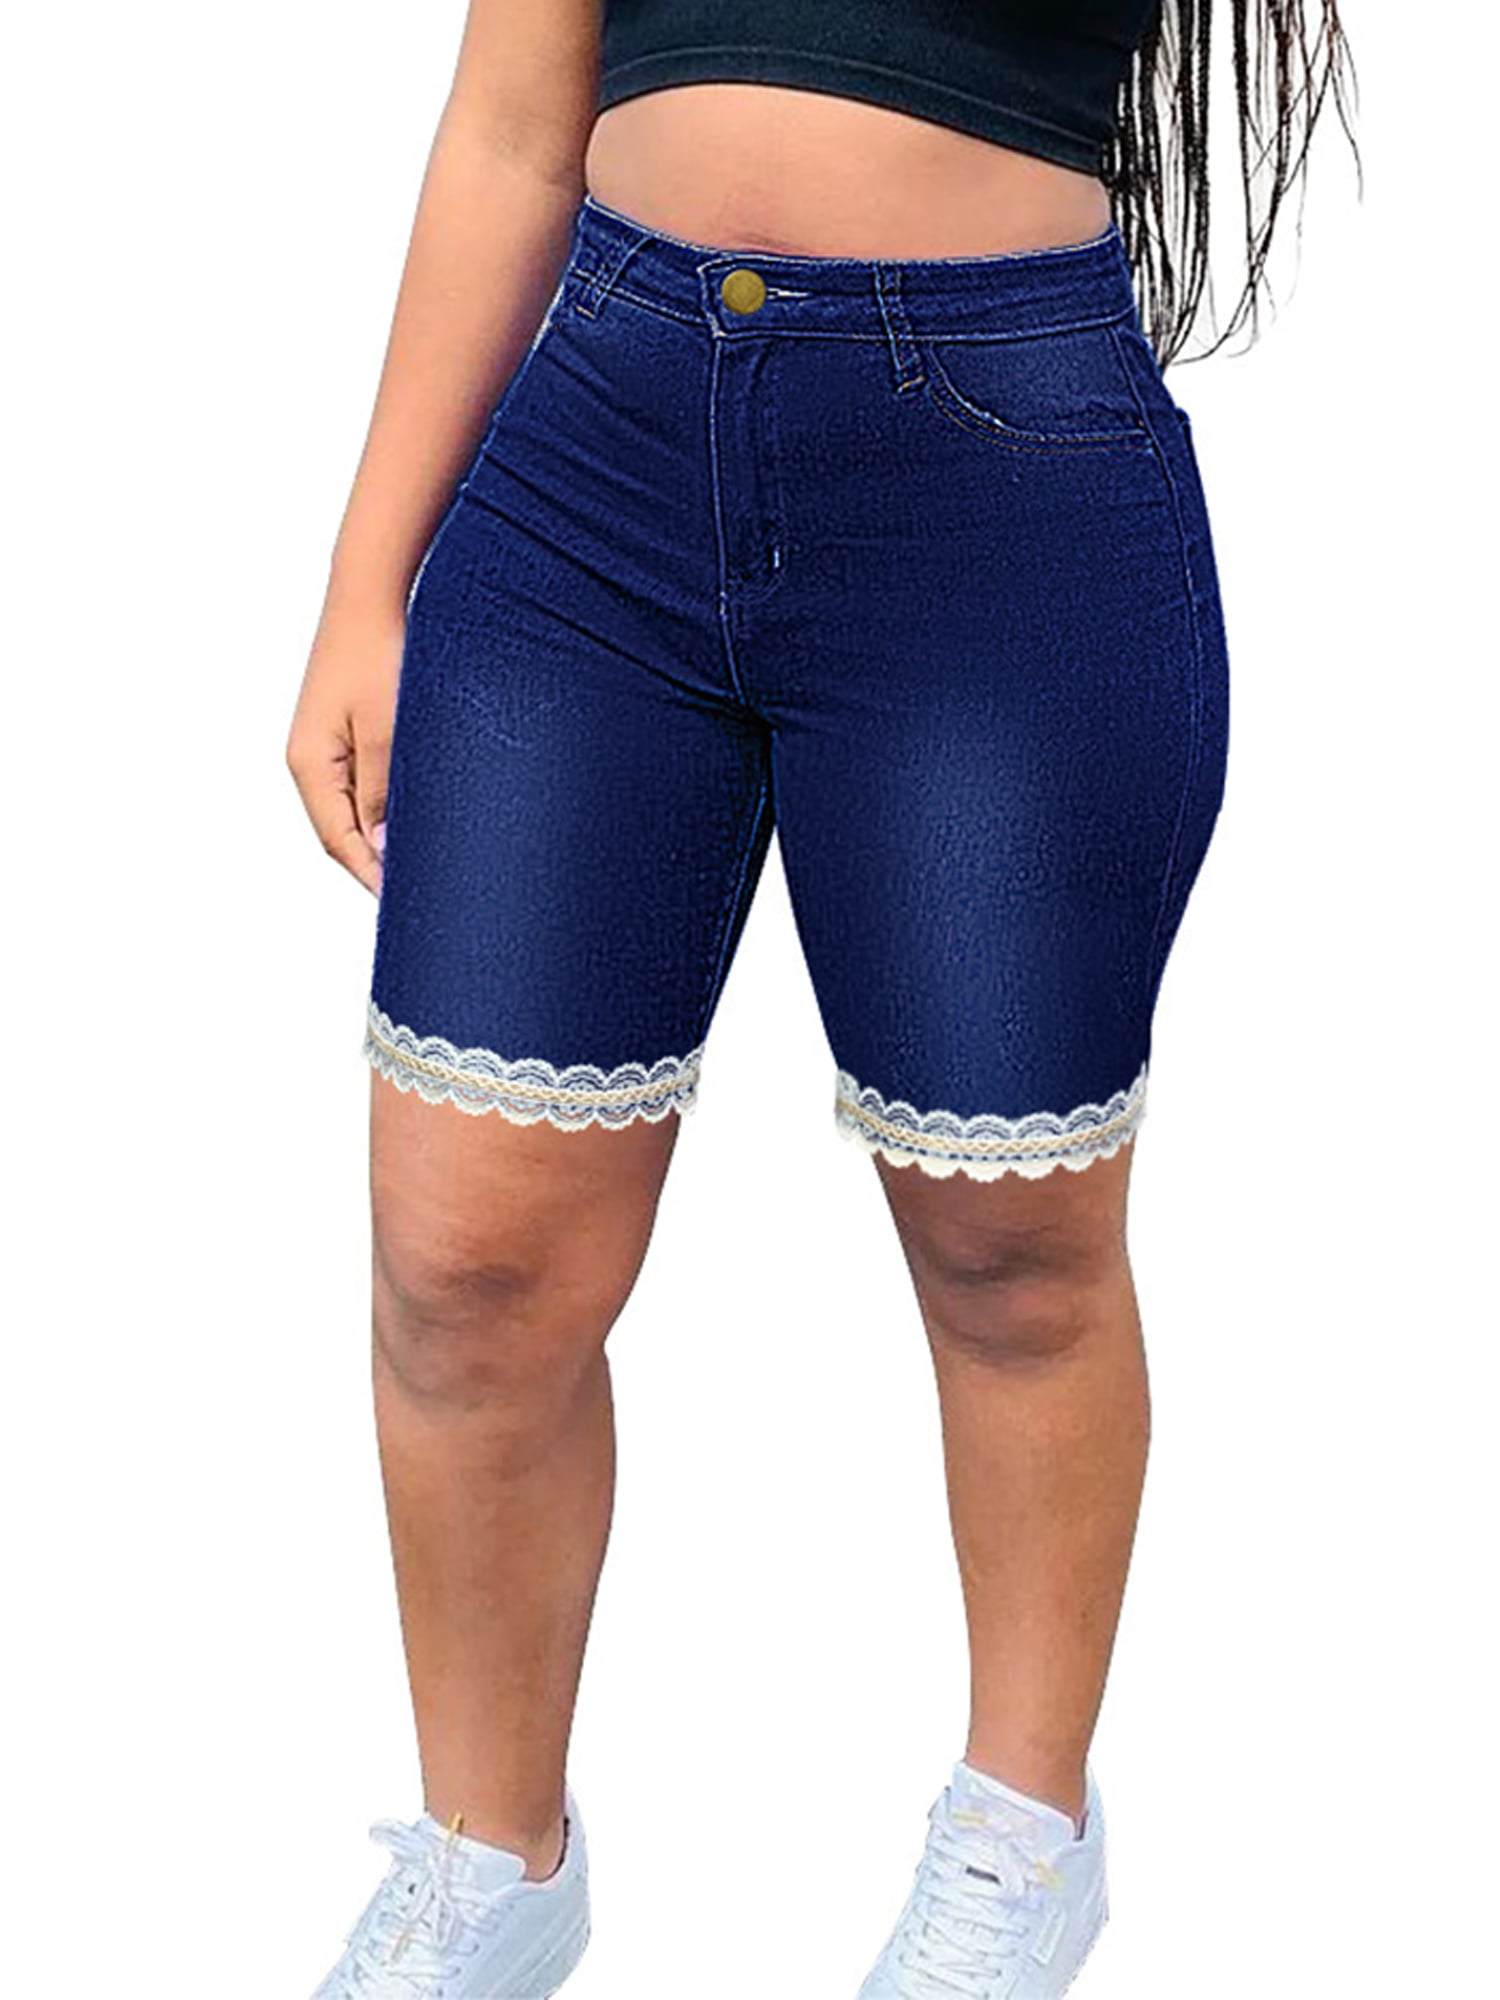 Capreze Plus Size Denim Shorts Women Summer Casual Rise Jeans Shorts Bermuda Pocket Short Pants - Walmart.com